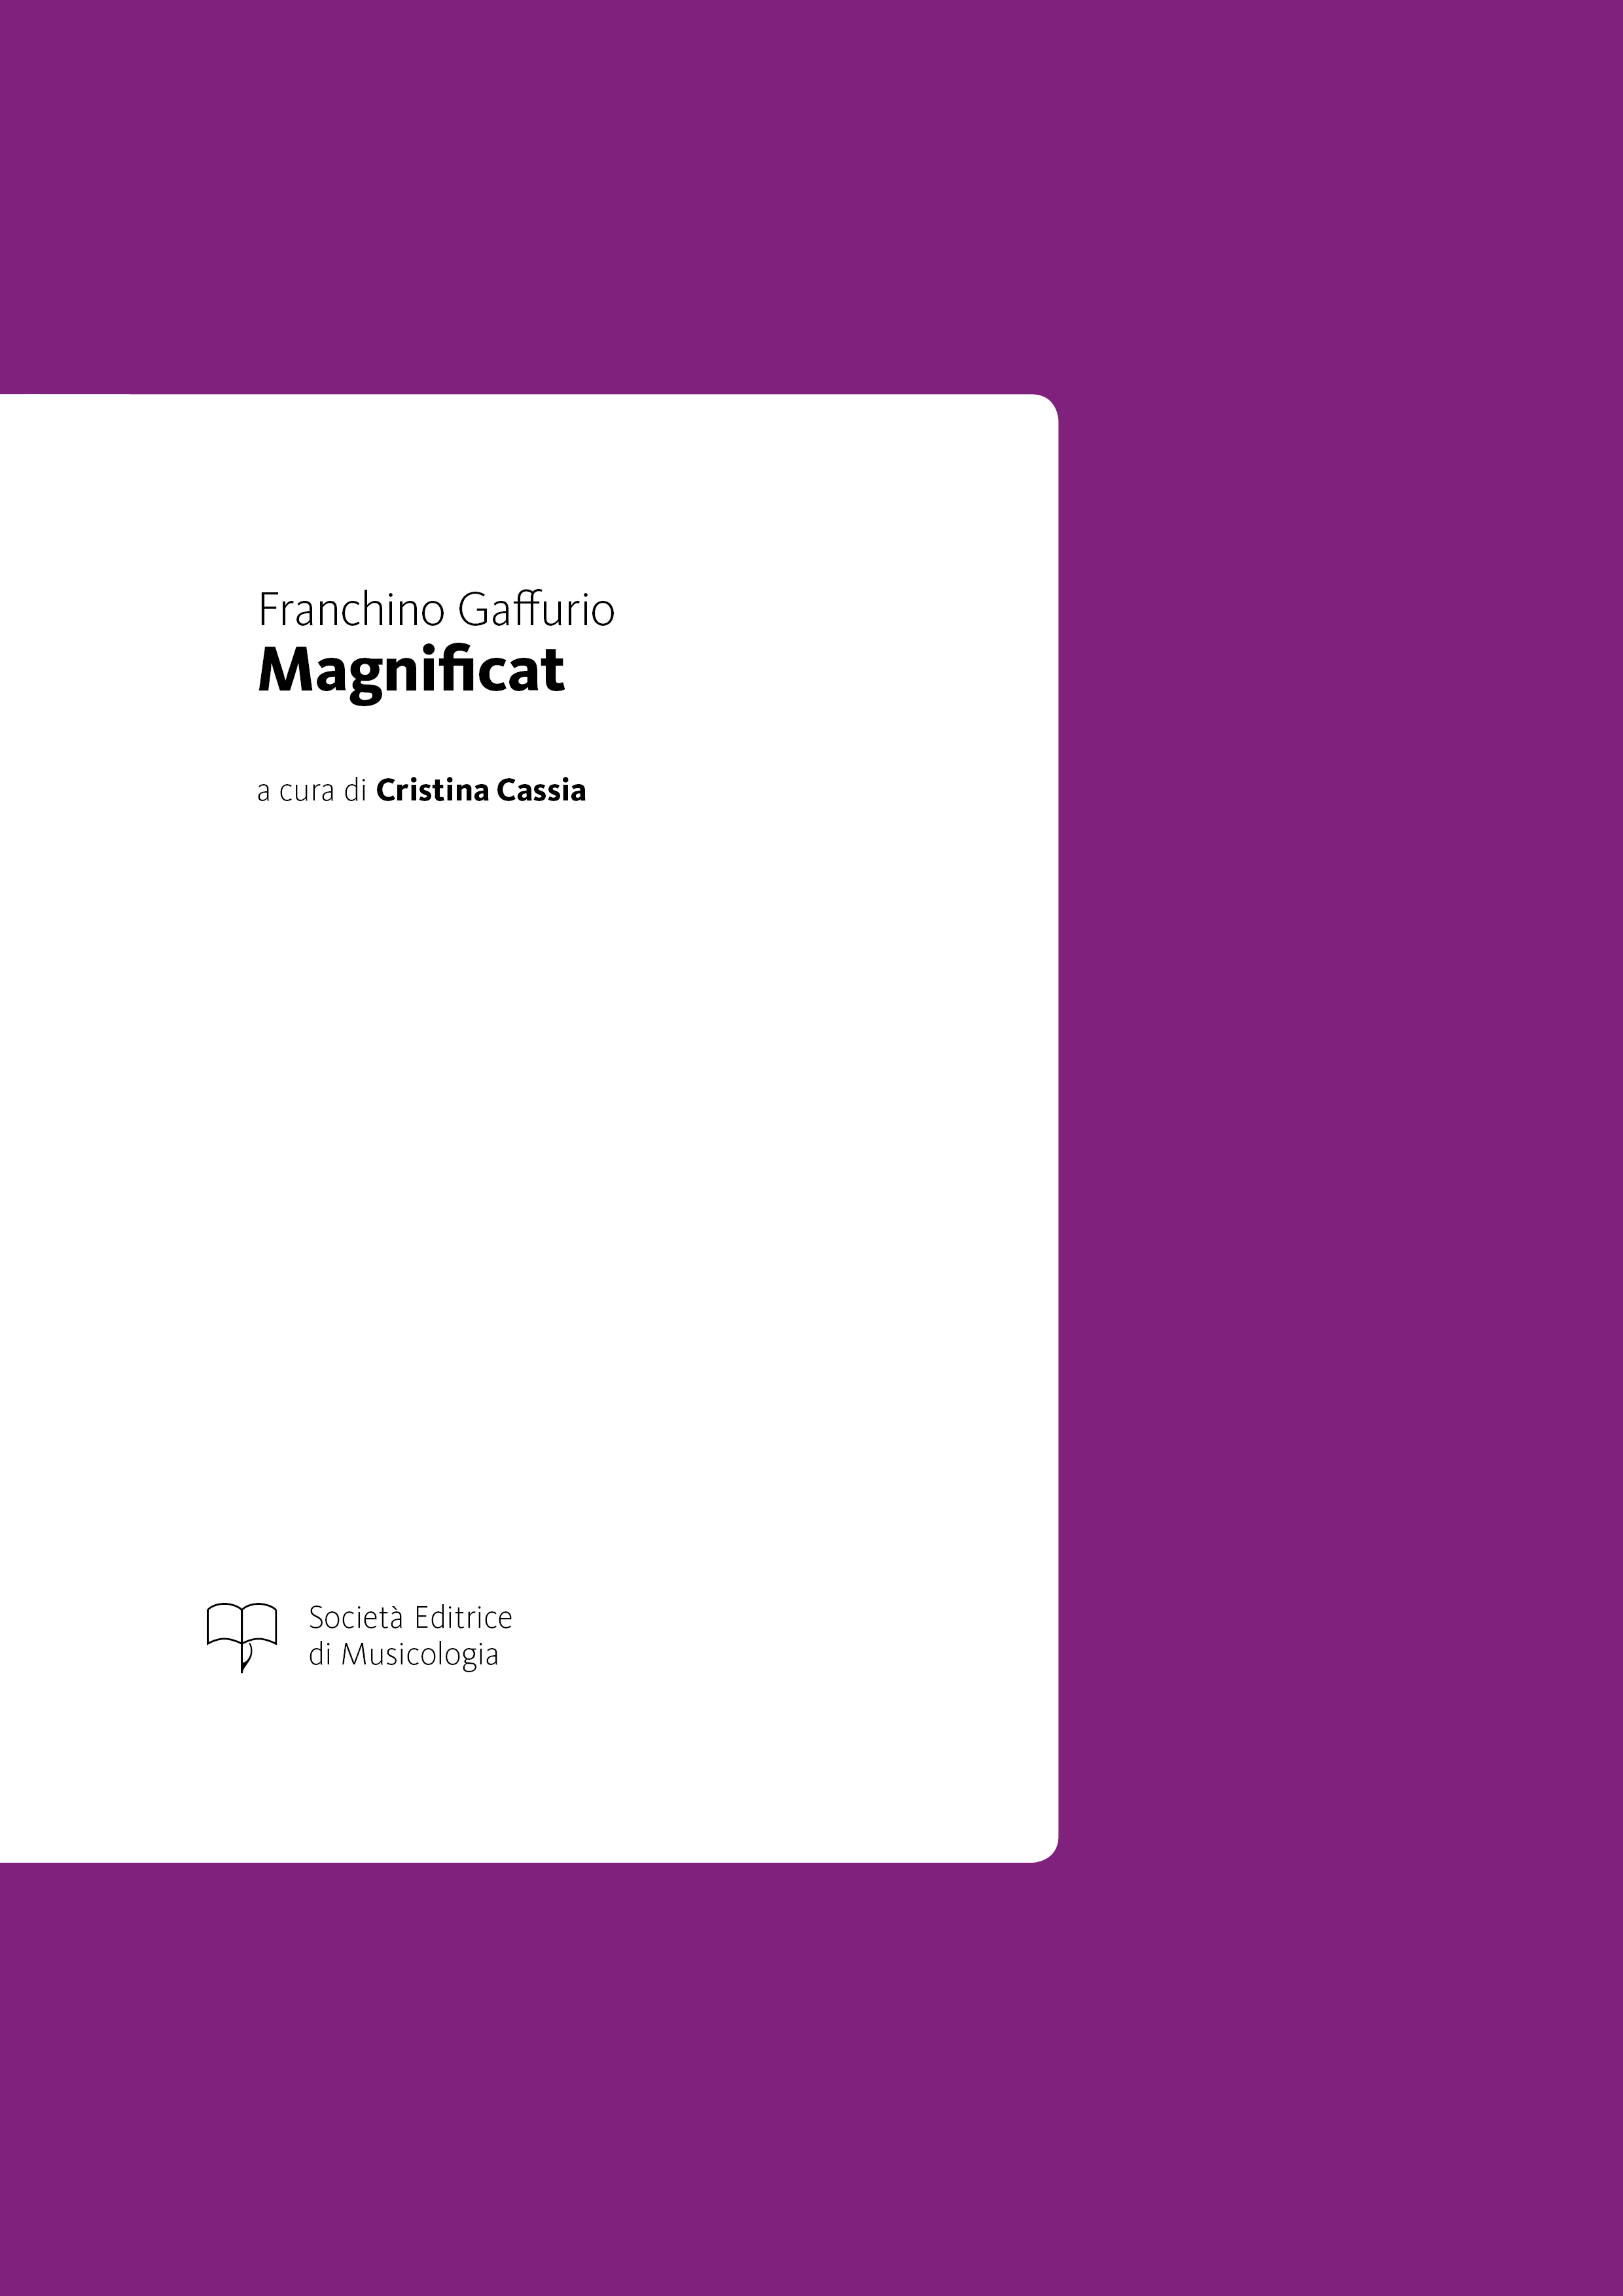 SEdM Gaffurio - 2. Magnificat - cover